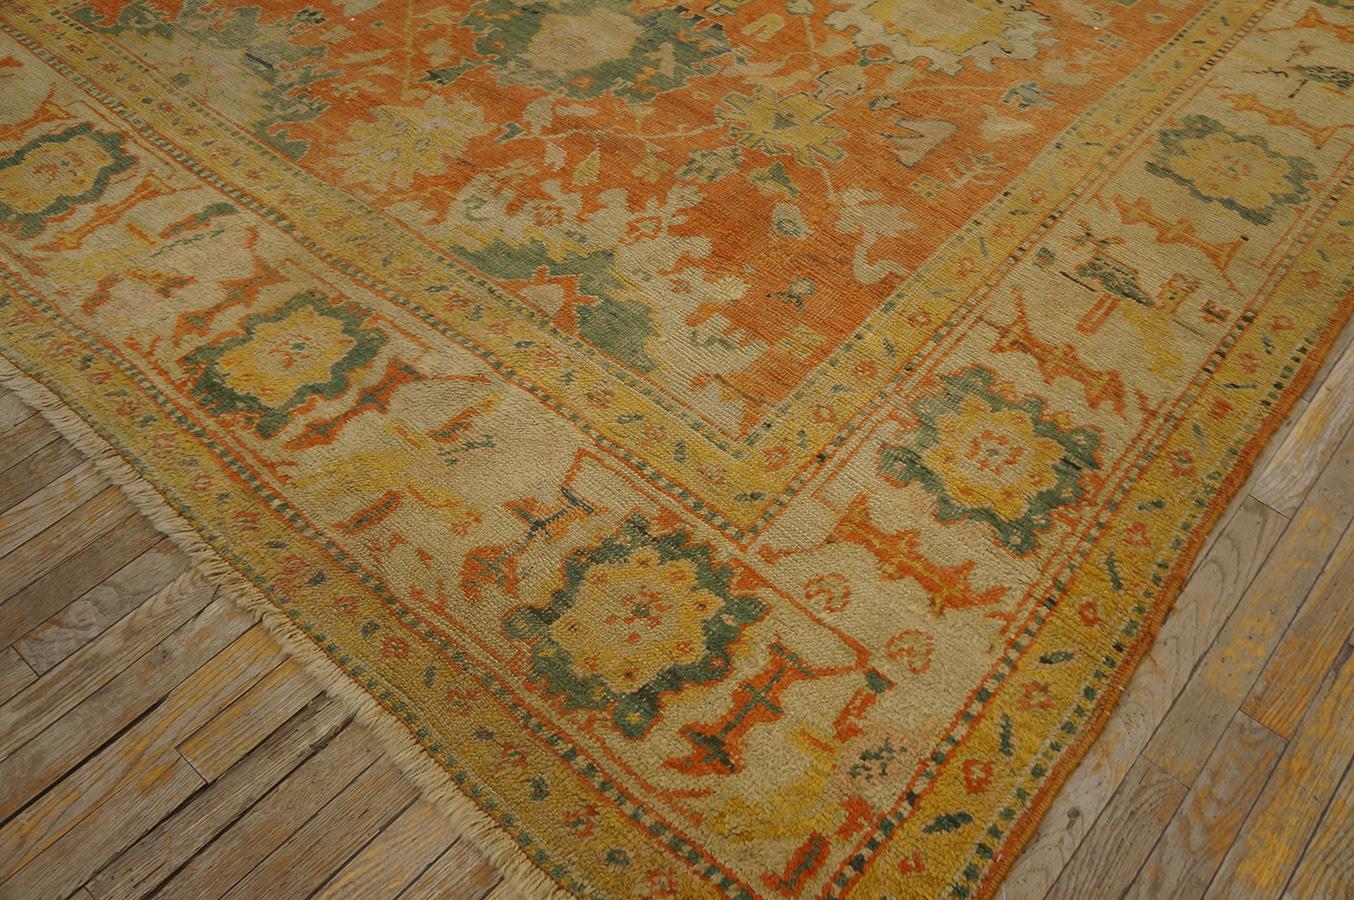 Late 19th Century Turkish Anatolian Oushak Carpet (8'4''x 11'2'' - 254 x 340 cm) For Sale 3